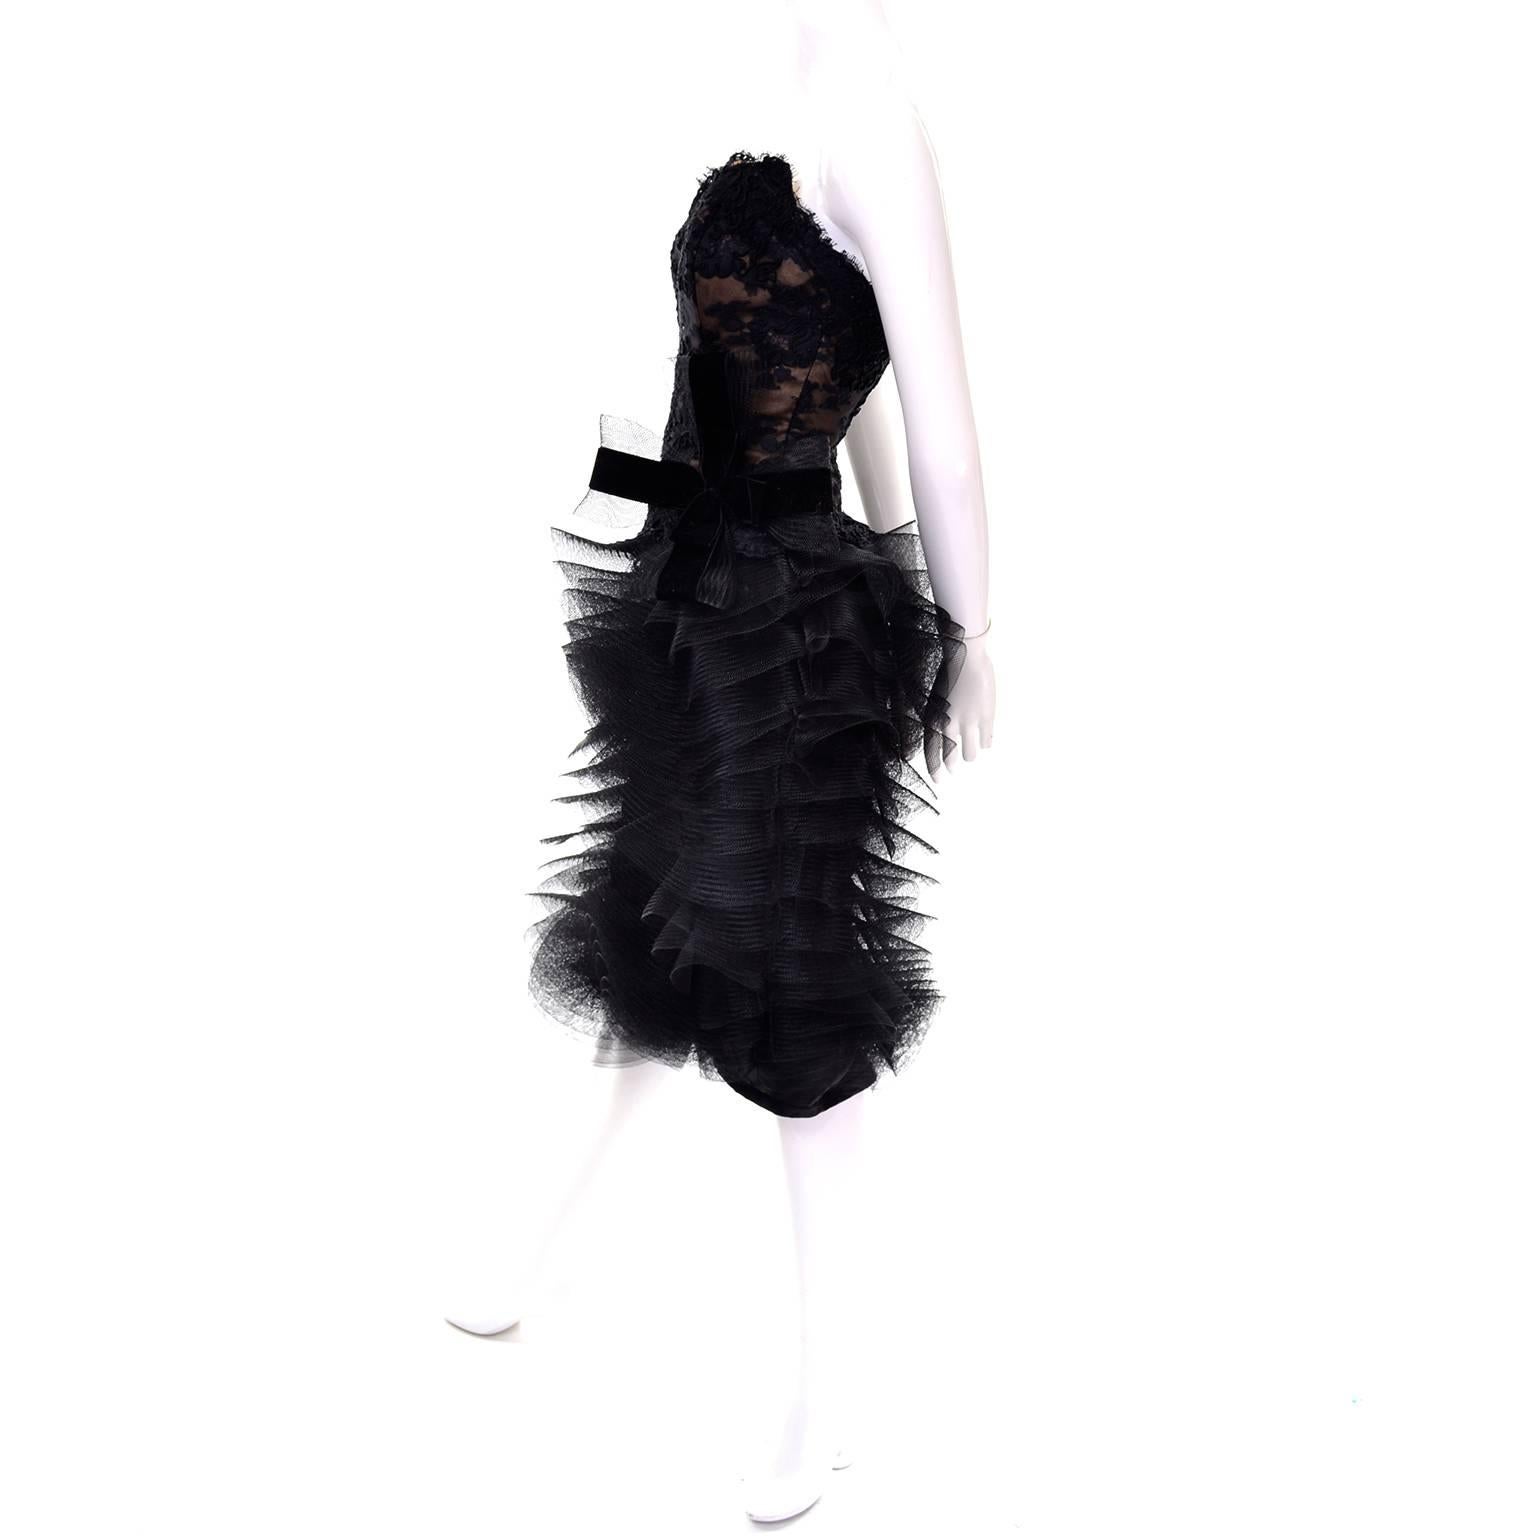 black avant garde dress